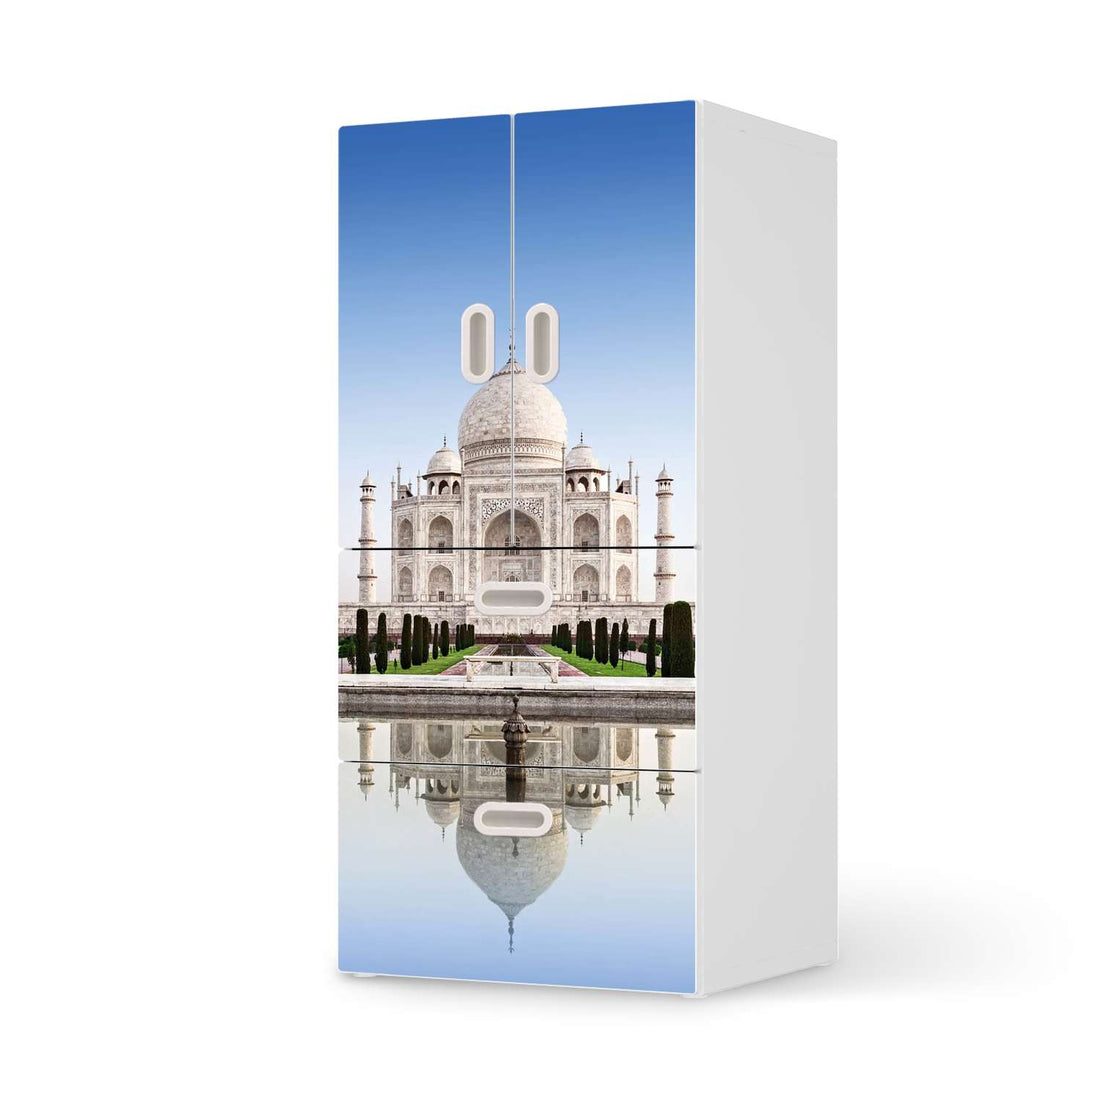 Möbelfolie Taj Mahal - IKEA Stuva / Fritids kombiniert - 2 Schubladen und 2 kleine Türen  - weiss